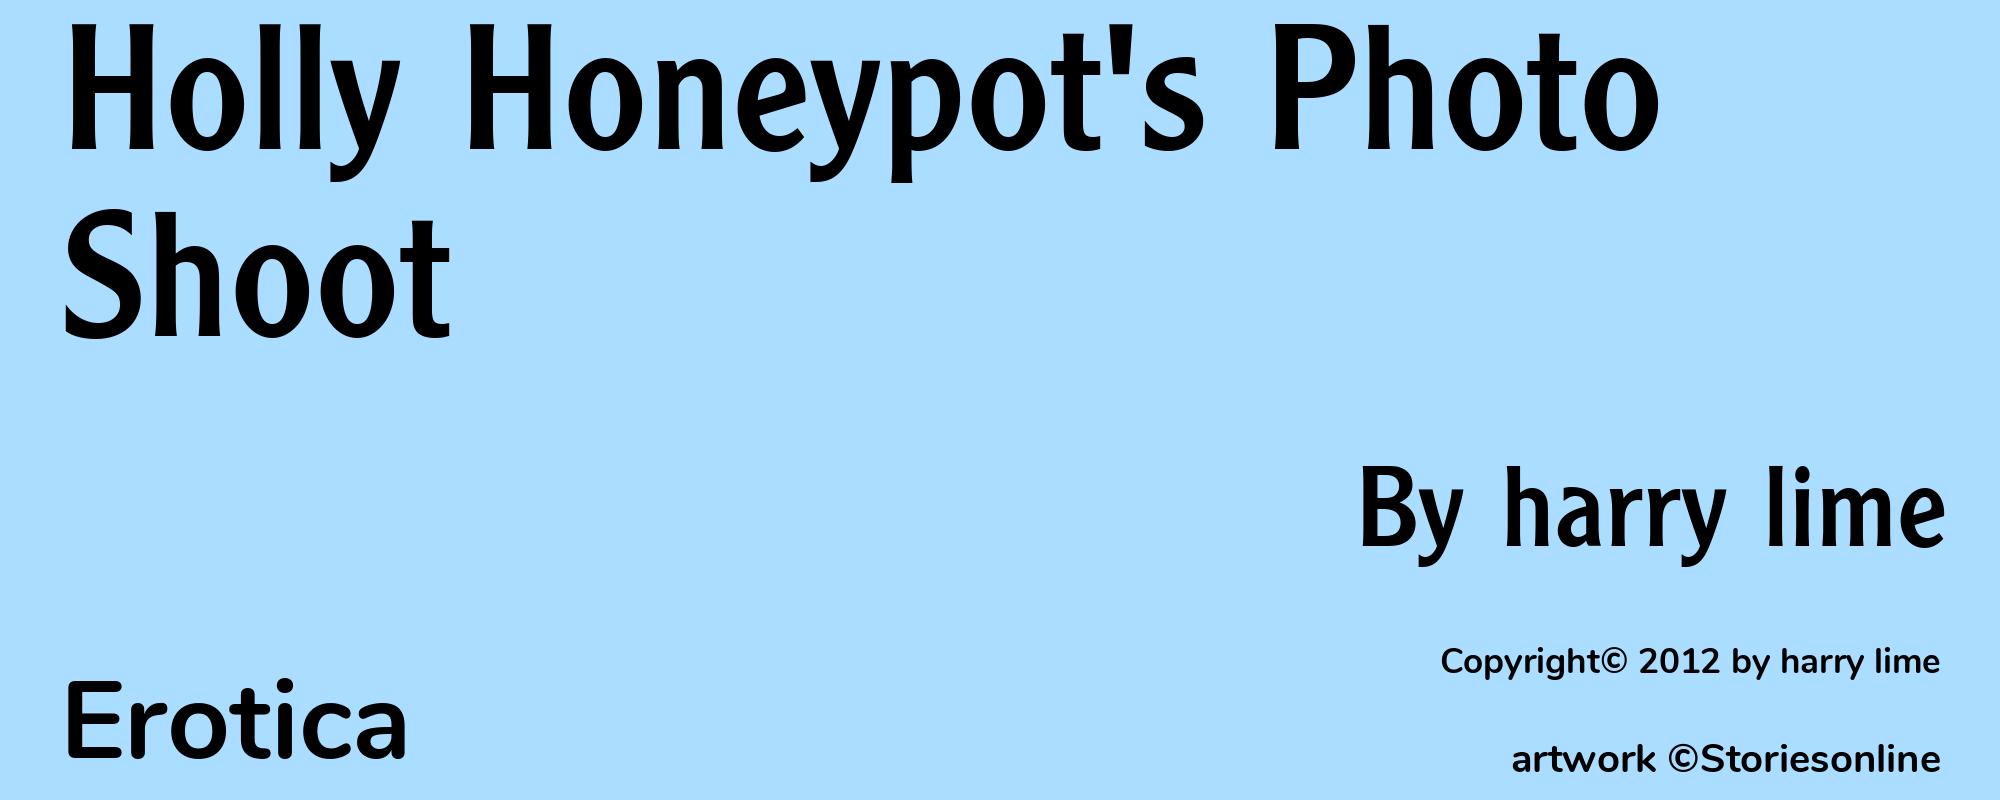 Holly Honeypot's Photo Shoot - Cover